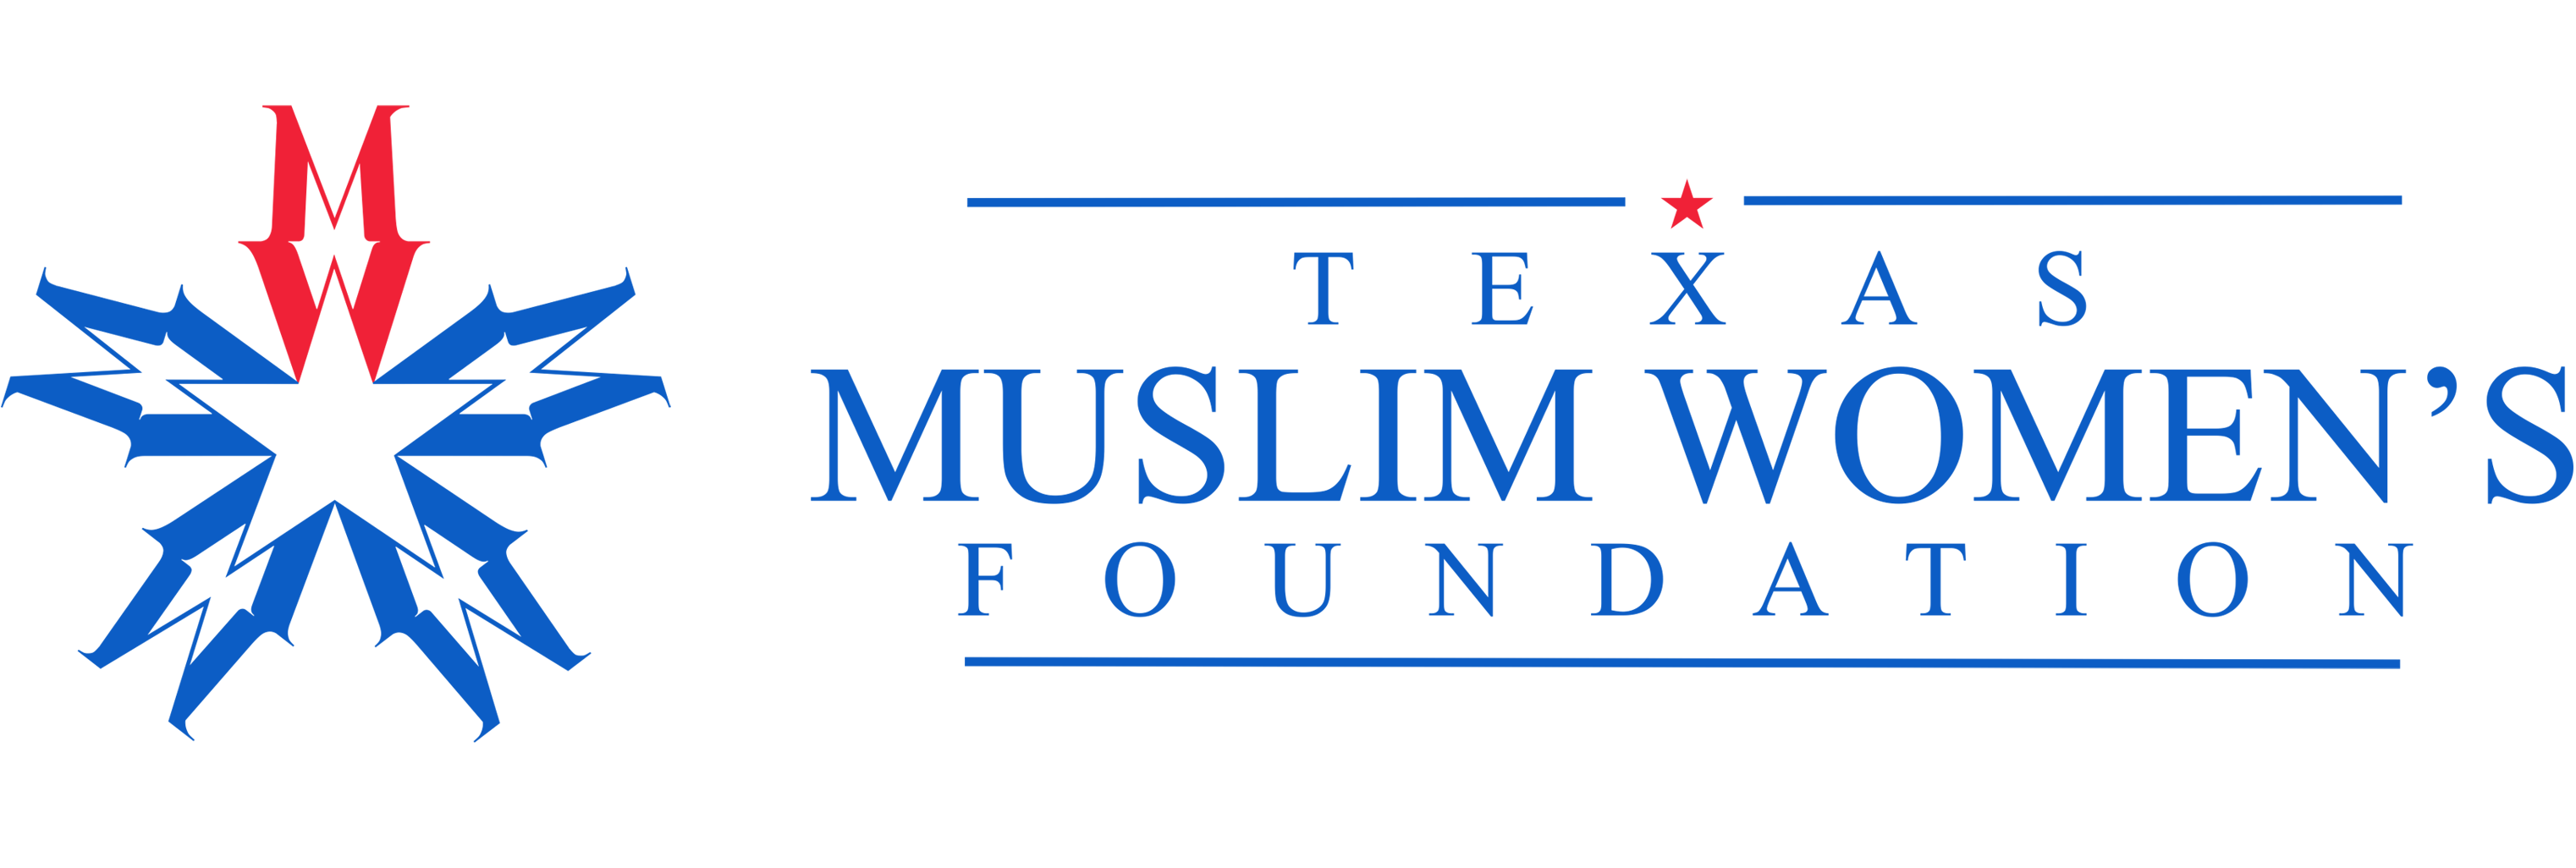 Texas Muslim Women's Foundation